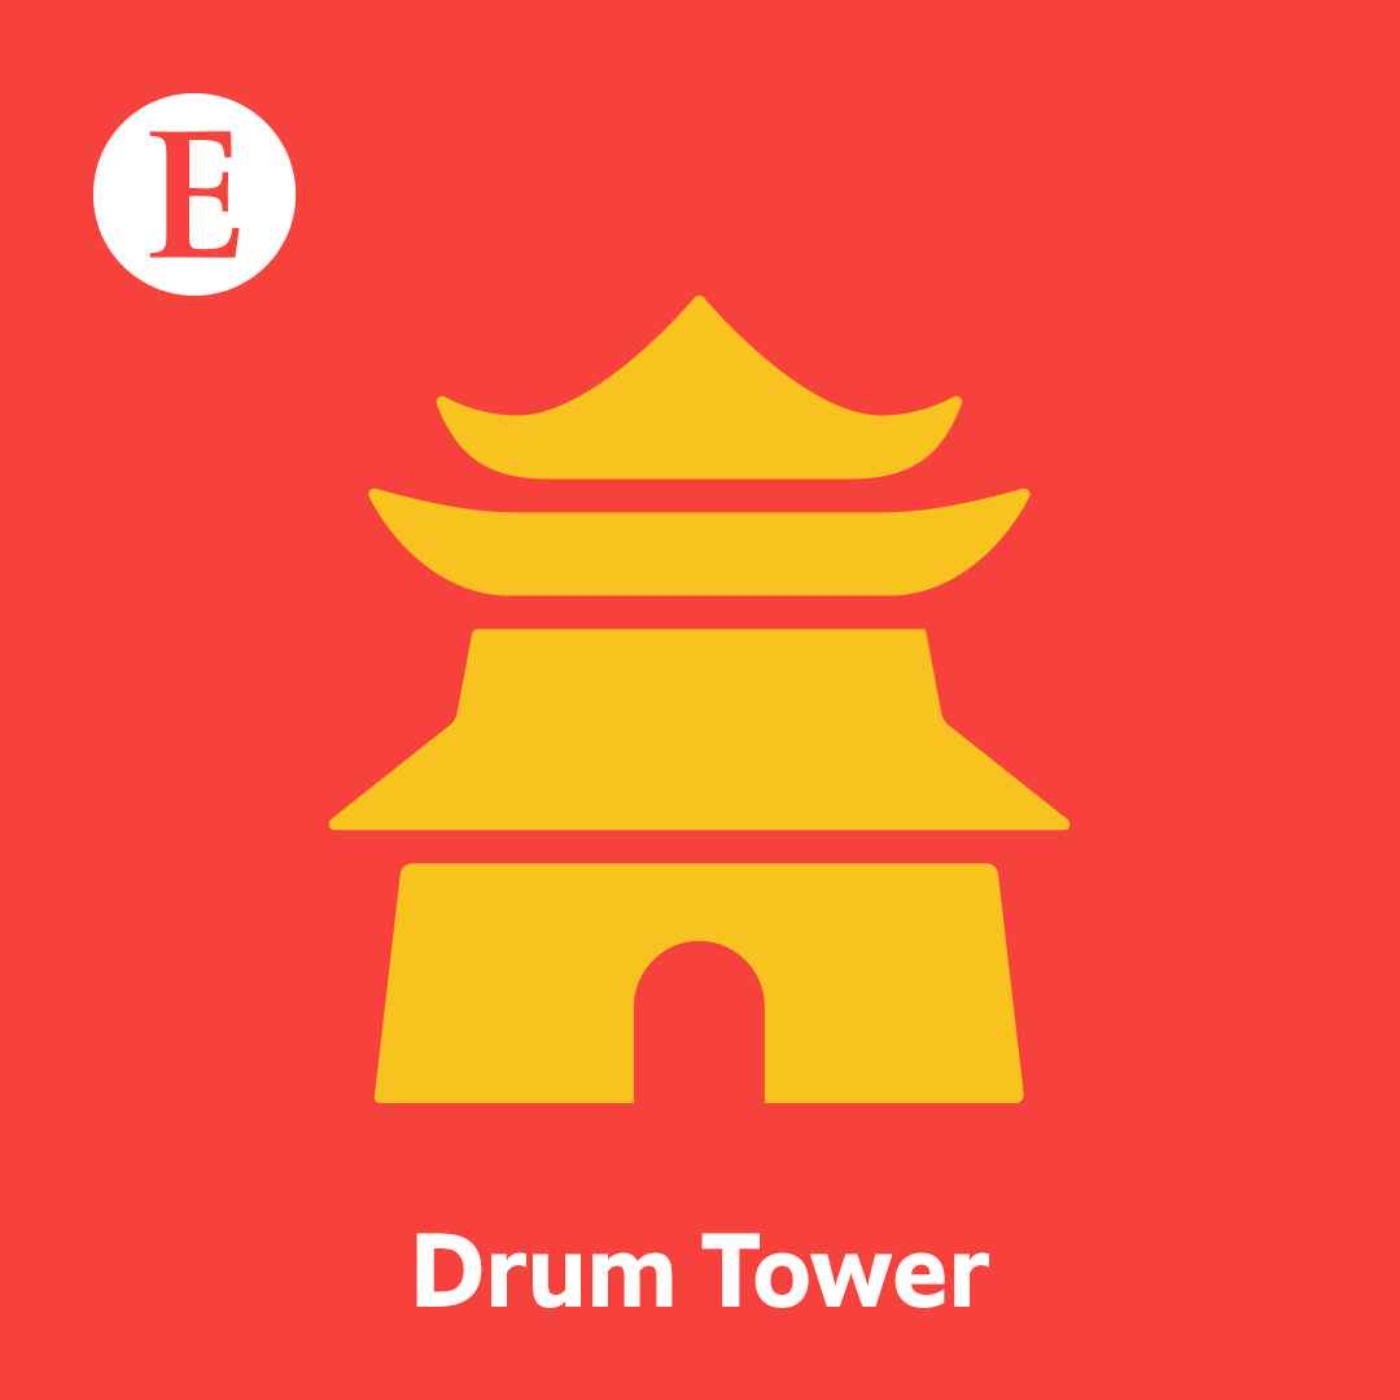 Drum Tower: Zero no more